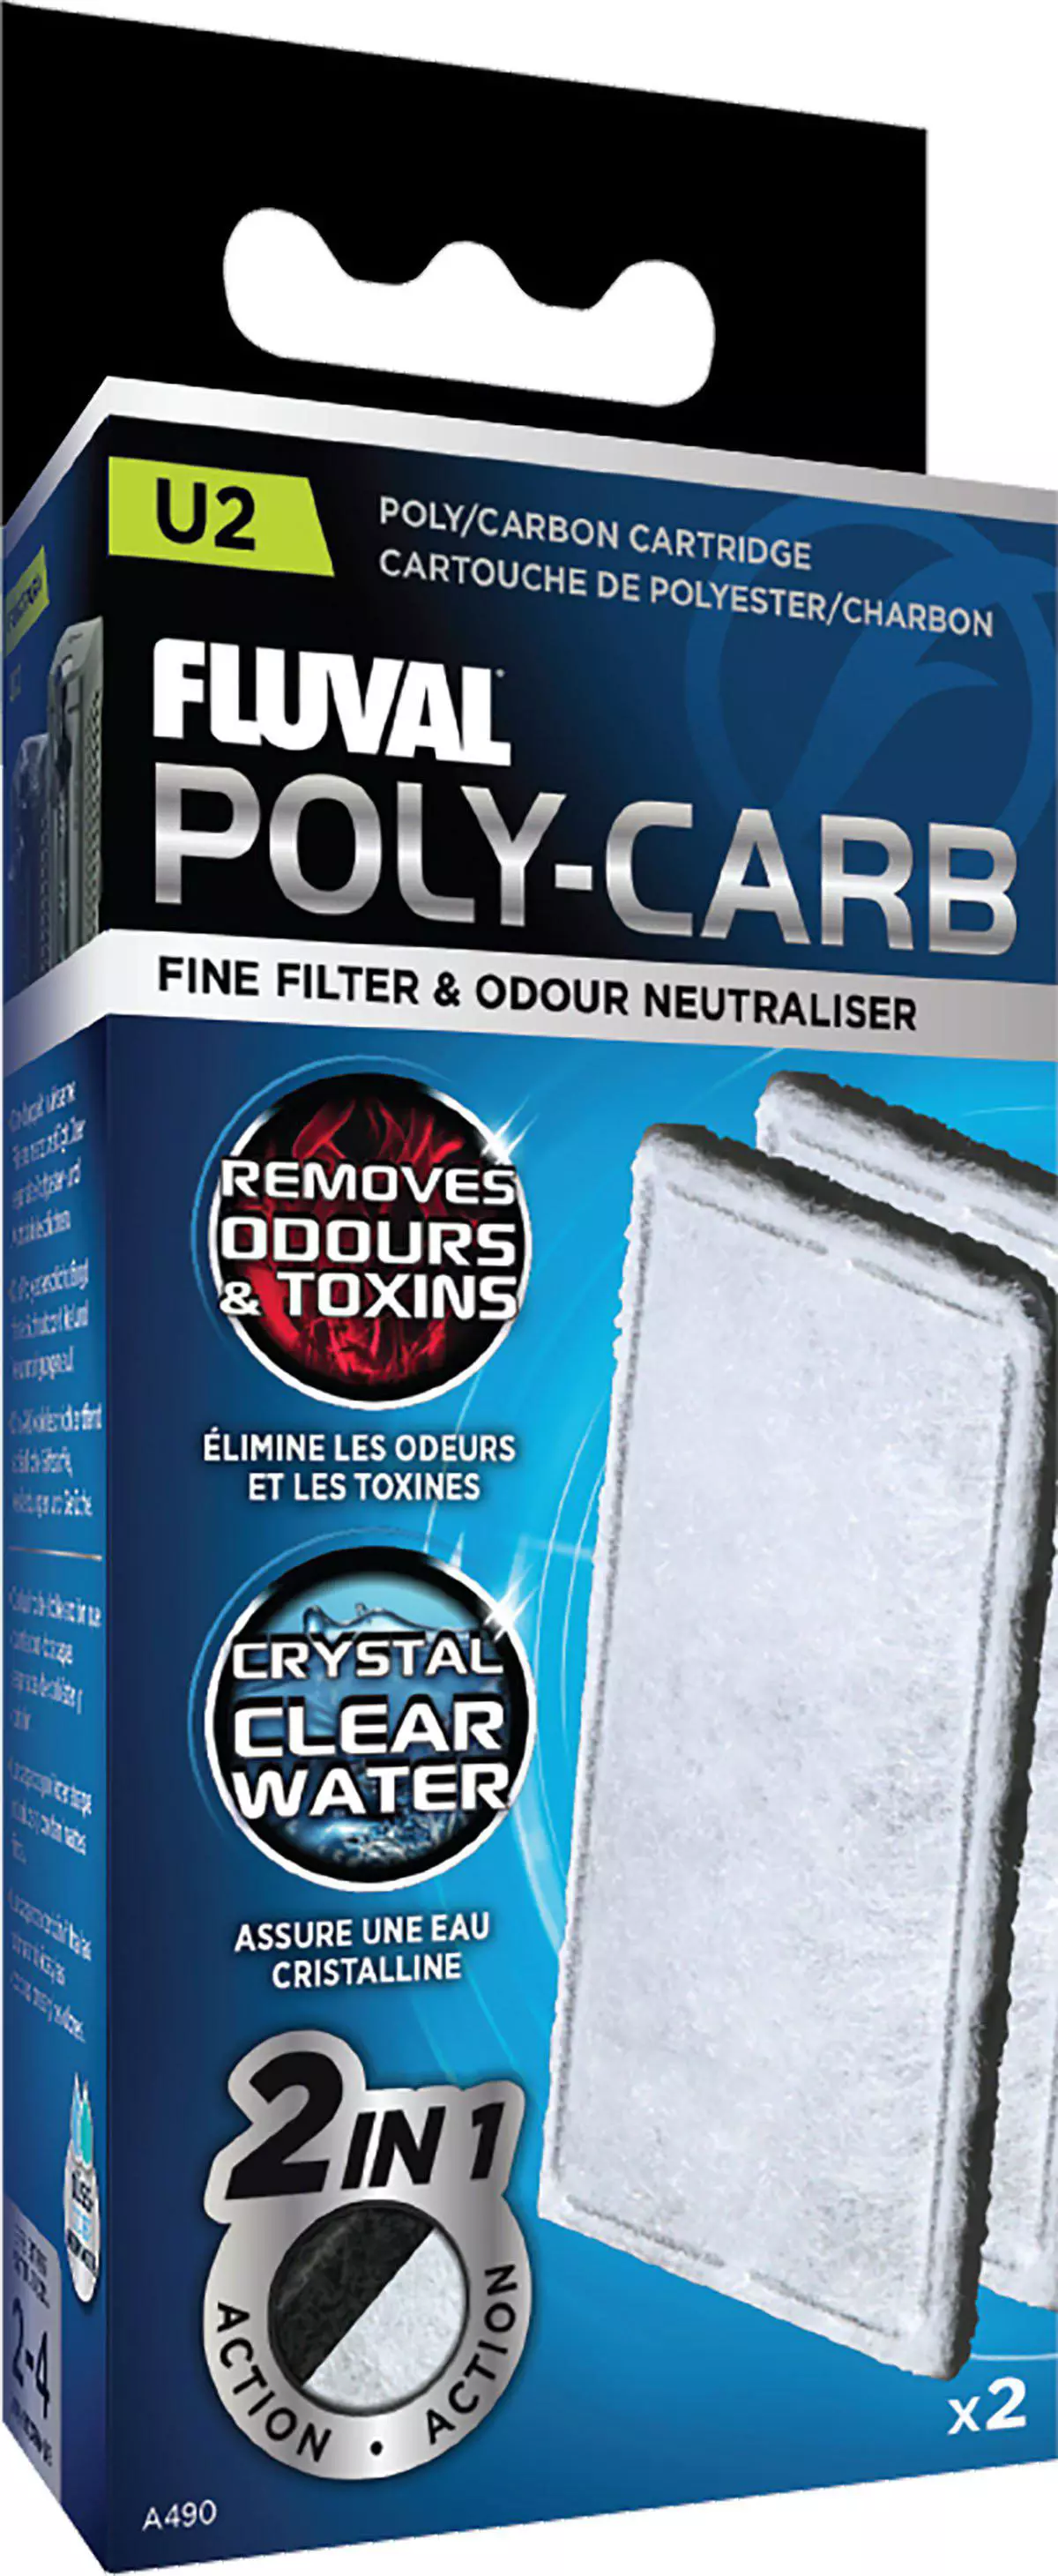 Fluval Poly-Carbon Cartridge Pack U2 .2490